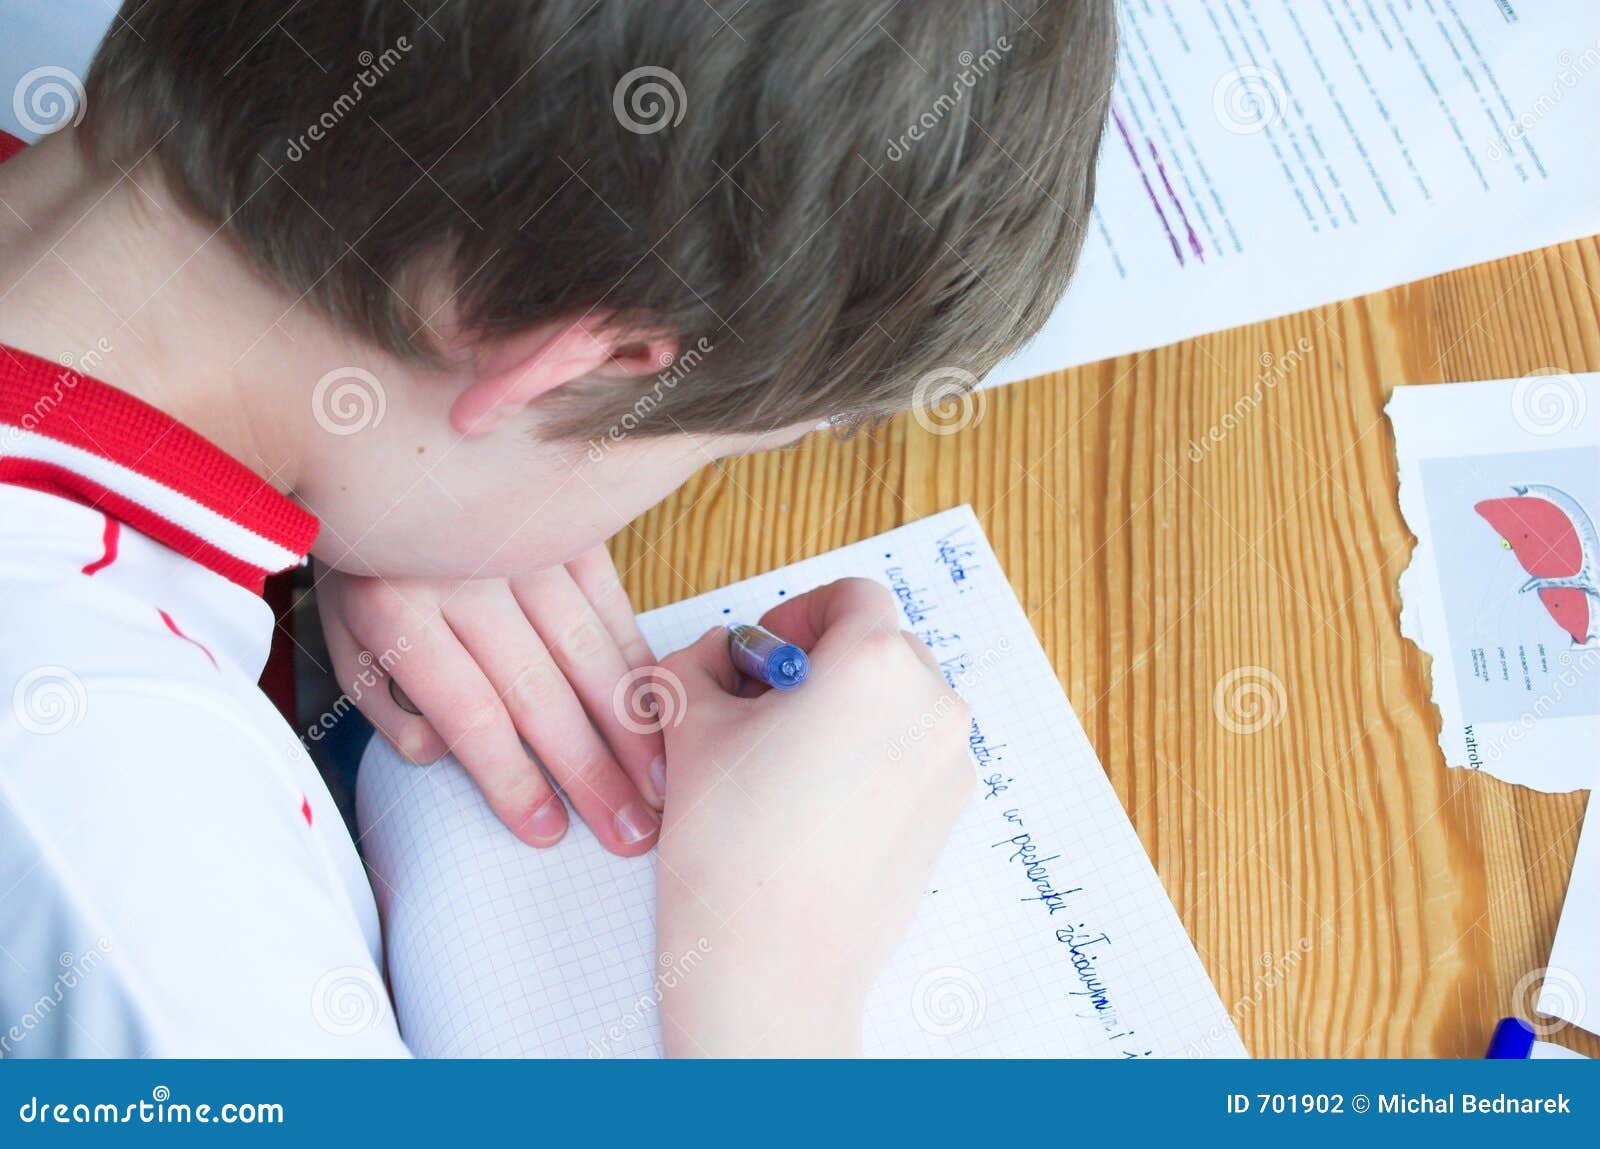 boy doing homework